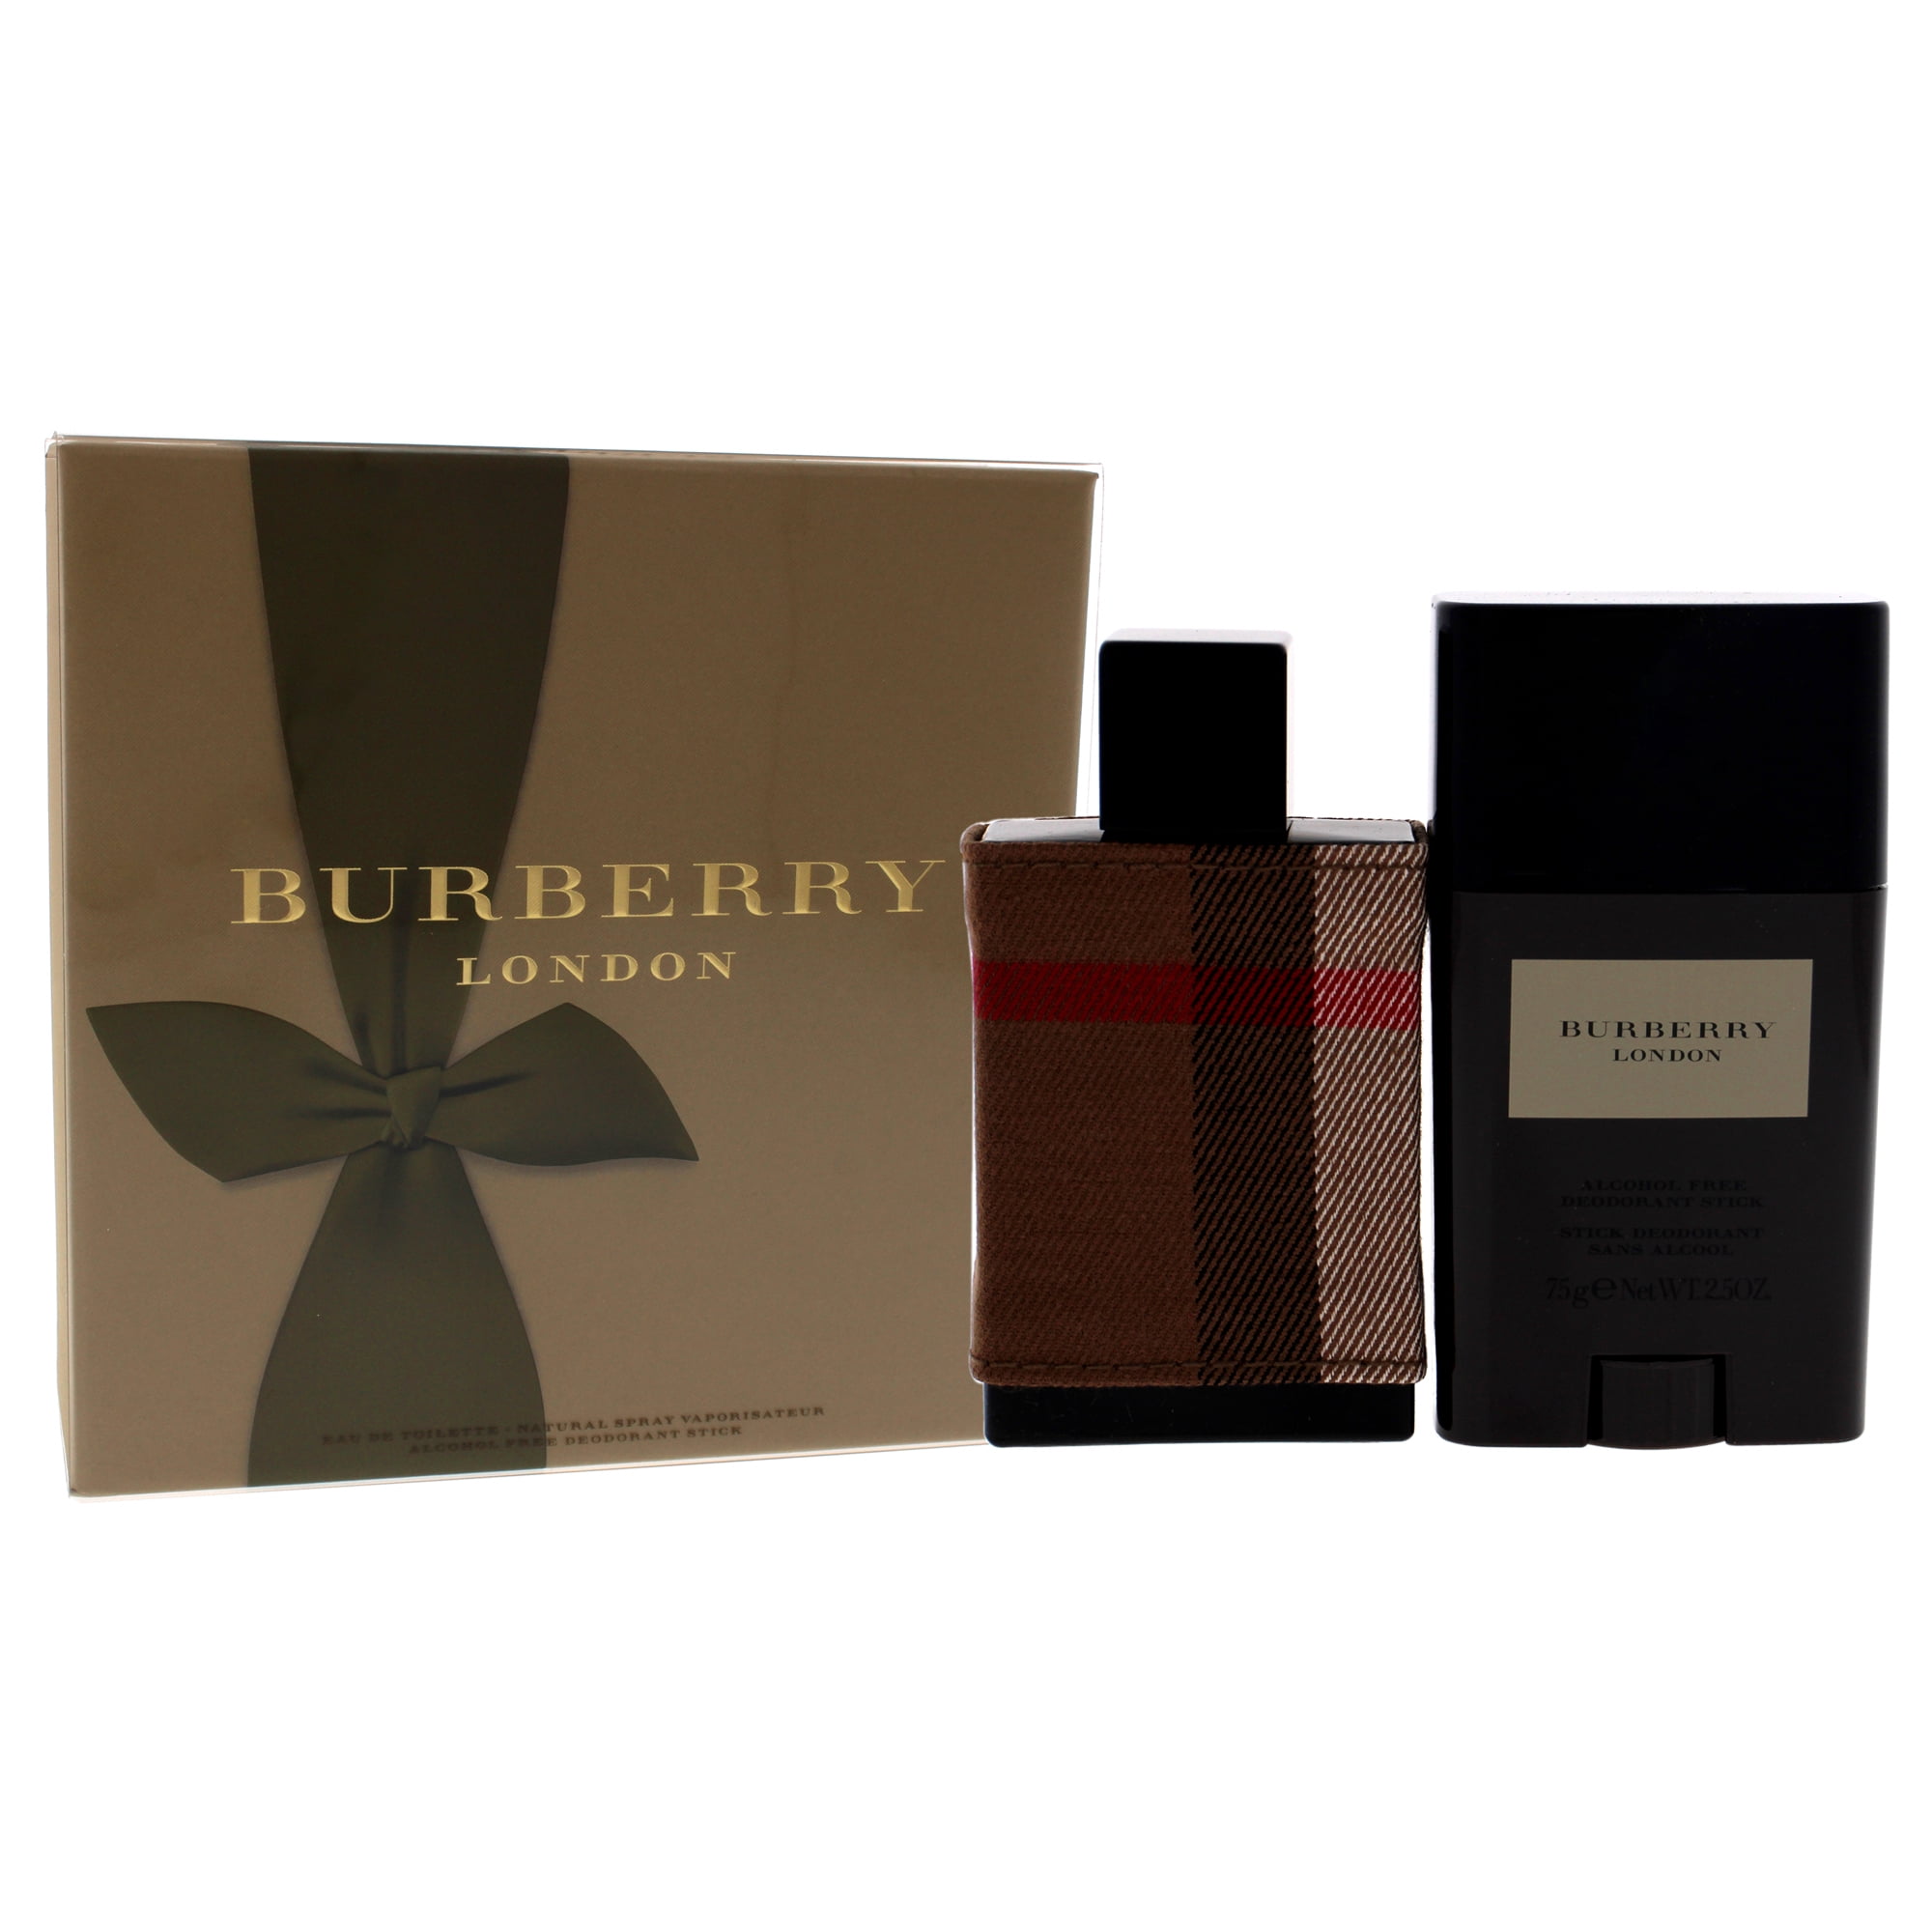 Burberry London Cologne Gift Set for Men, 2 Pieces - Walmart.com